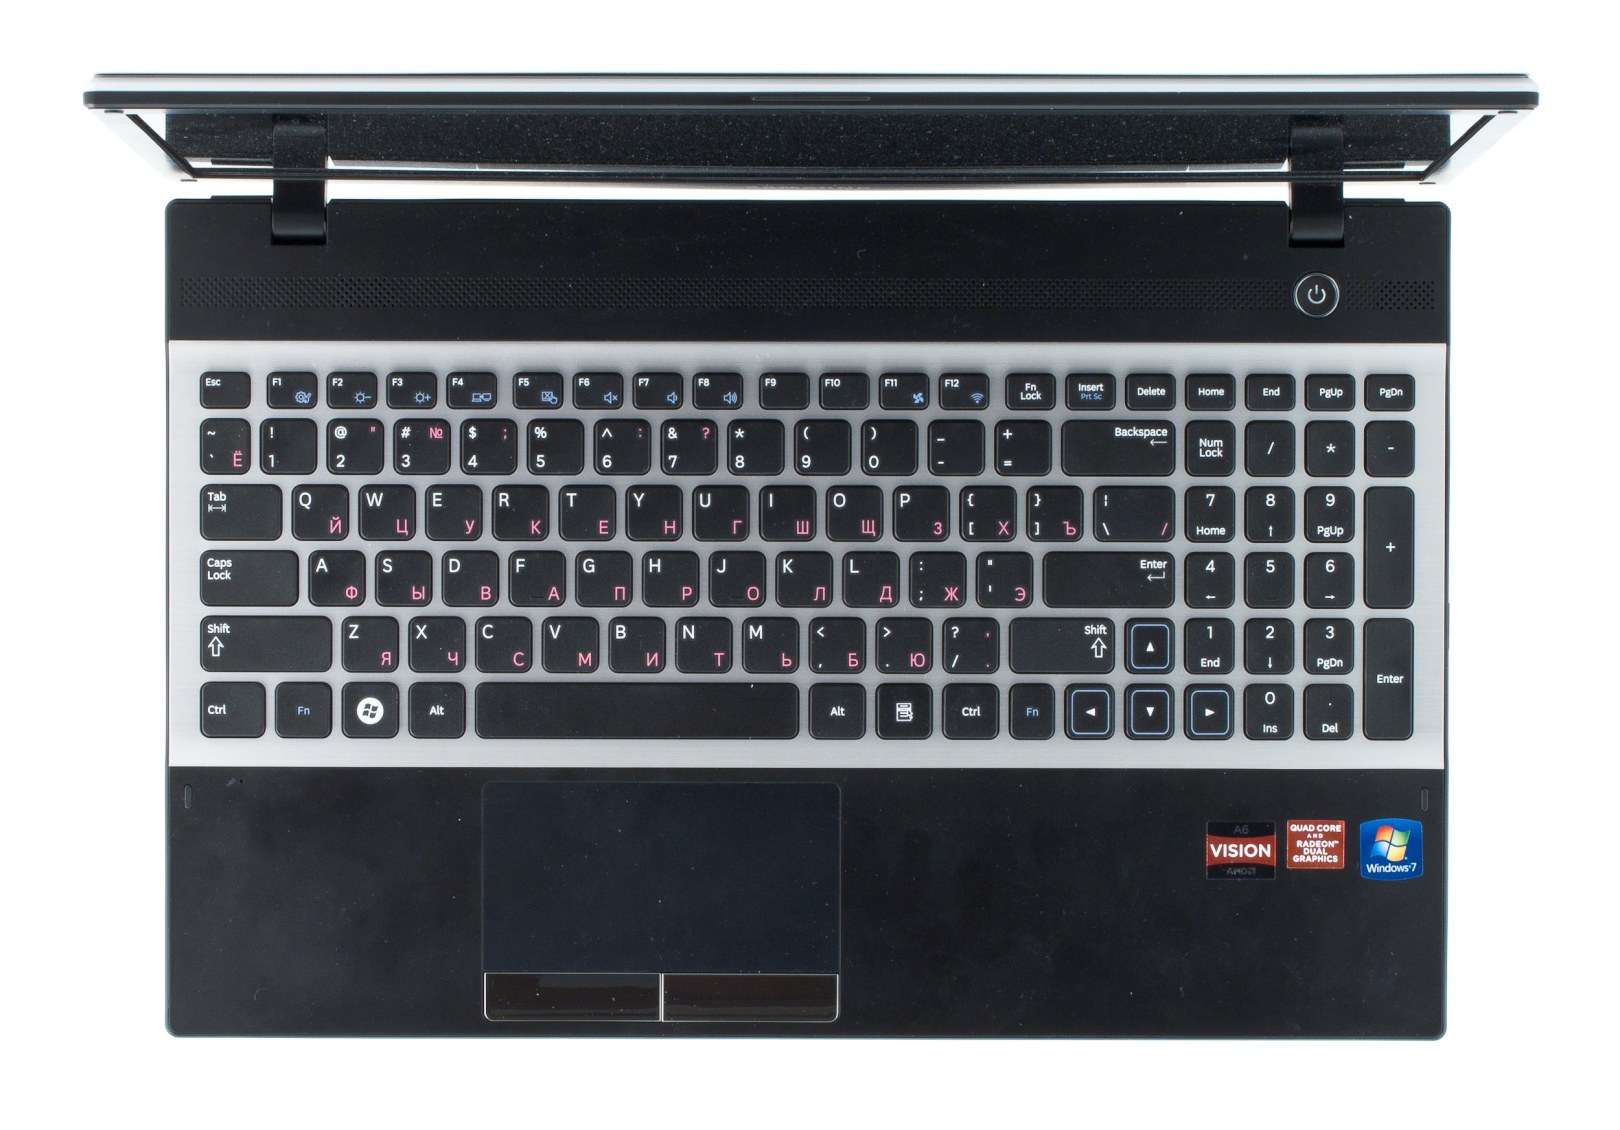 Ноутбуки Цены И Характеристики Самсунг Rc530